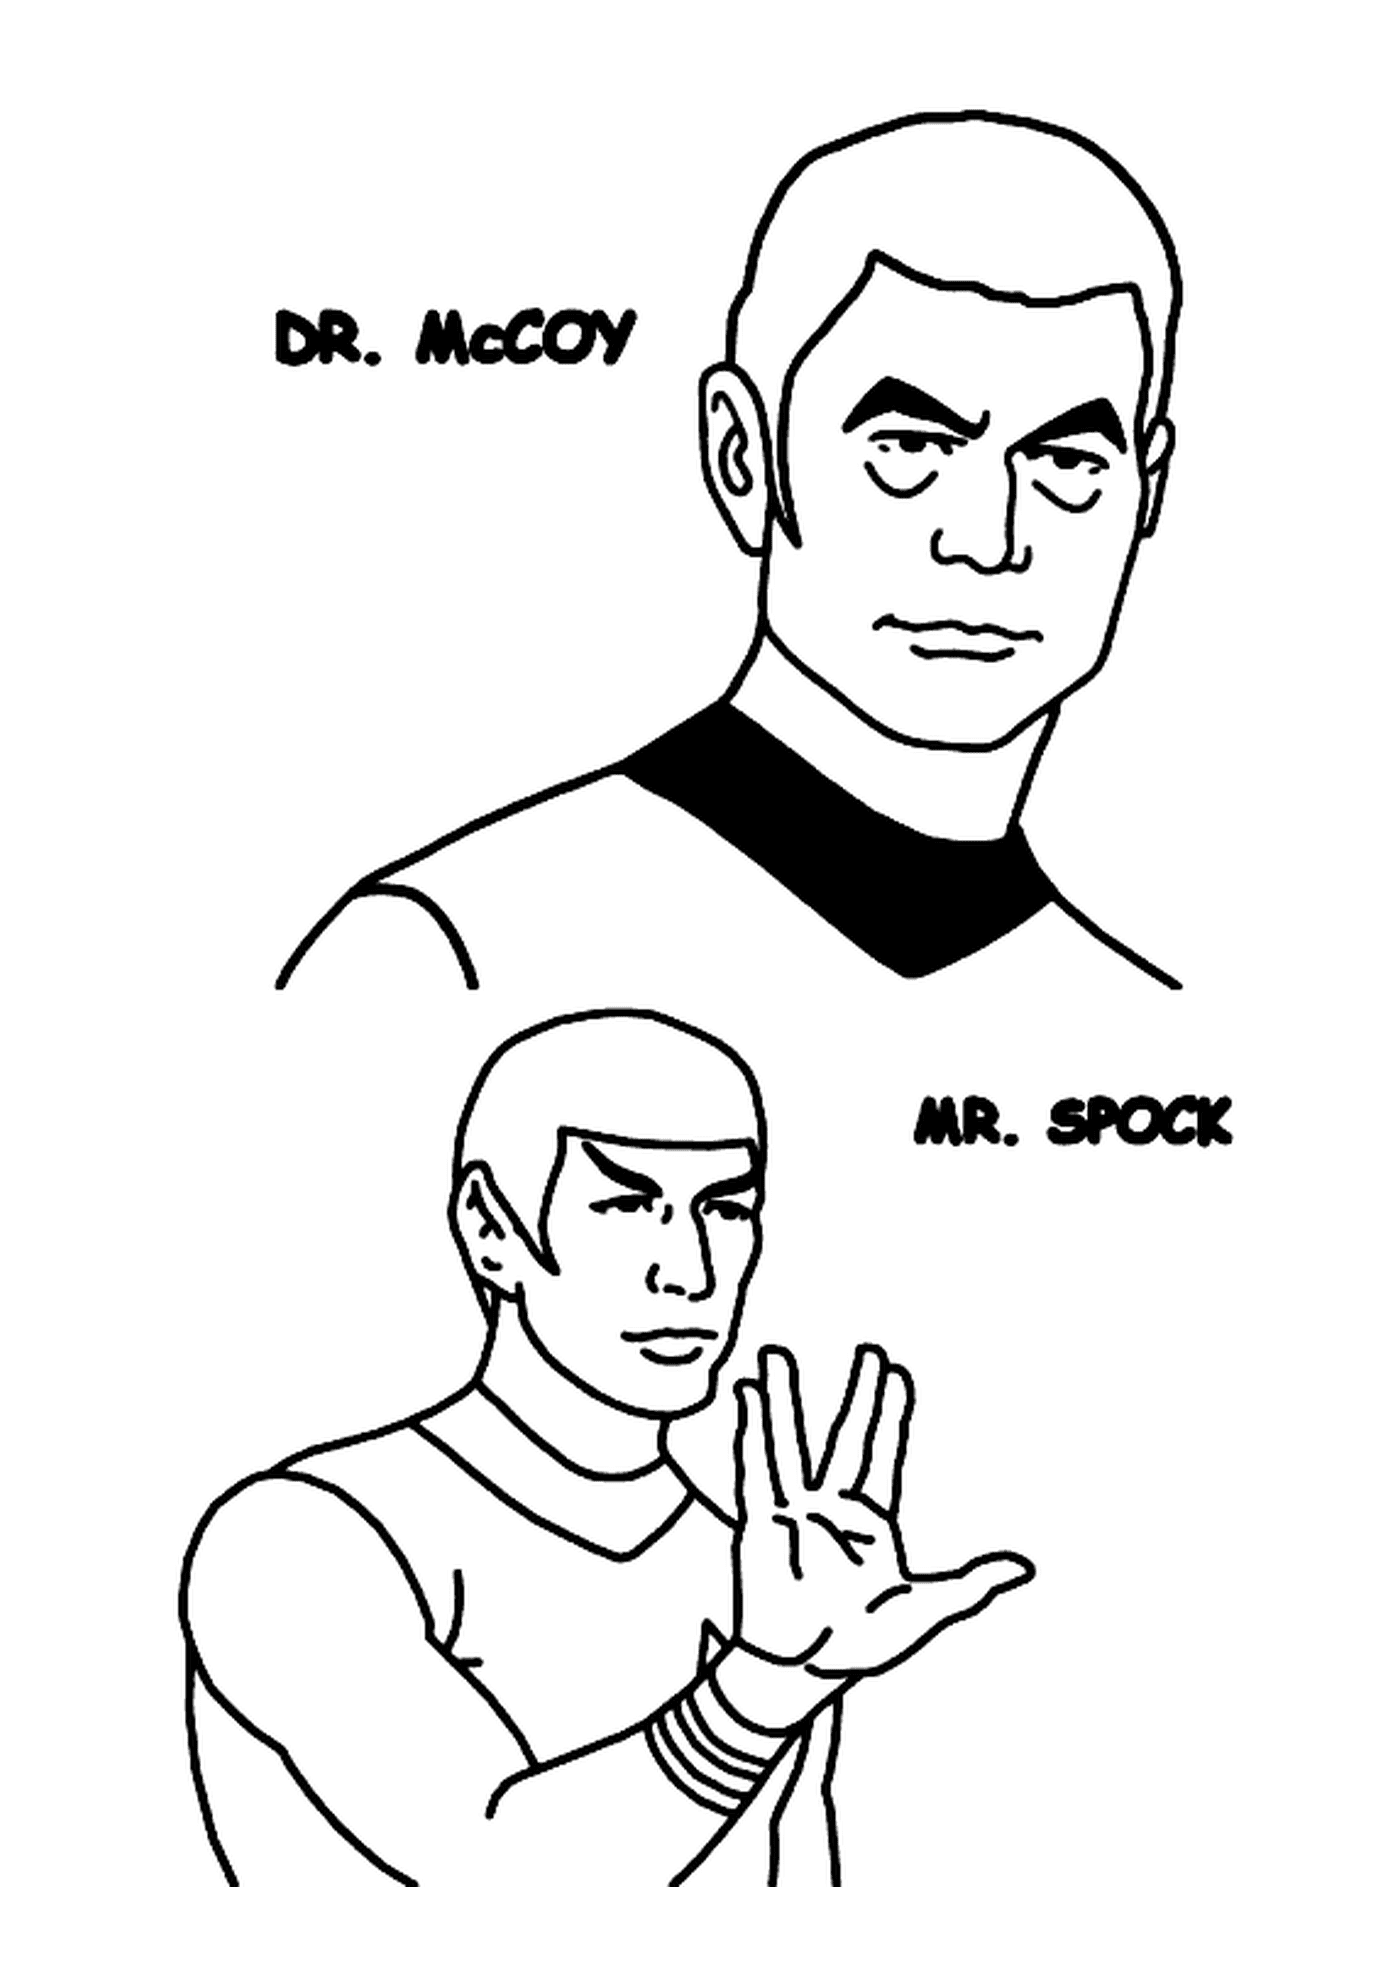  El Dr. McCoy y el Sr. Spock de Star Trek 